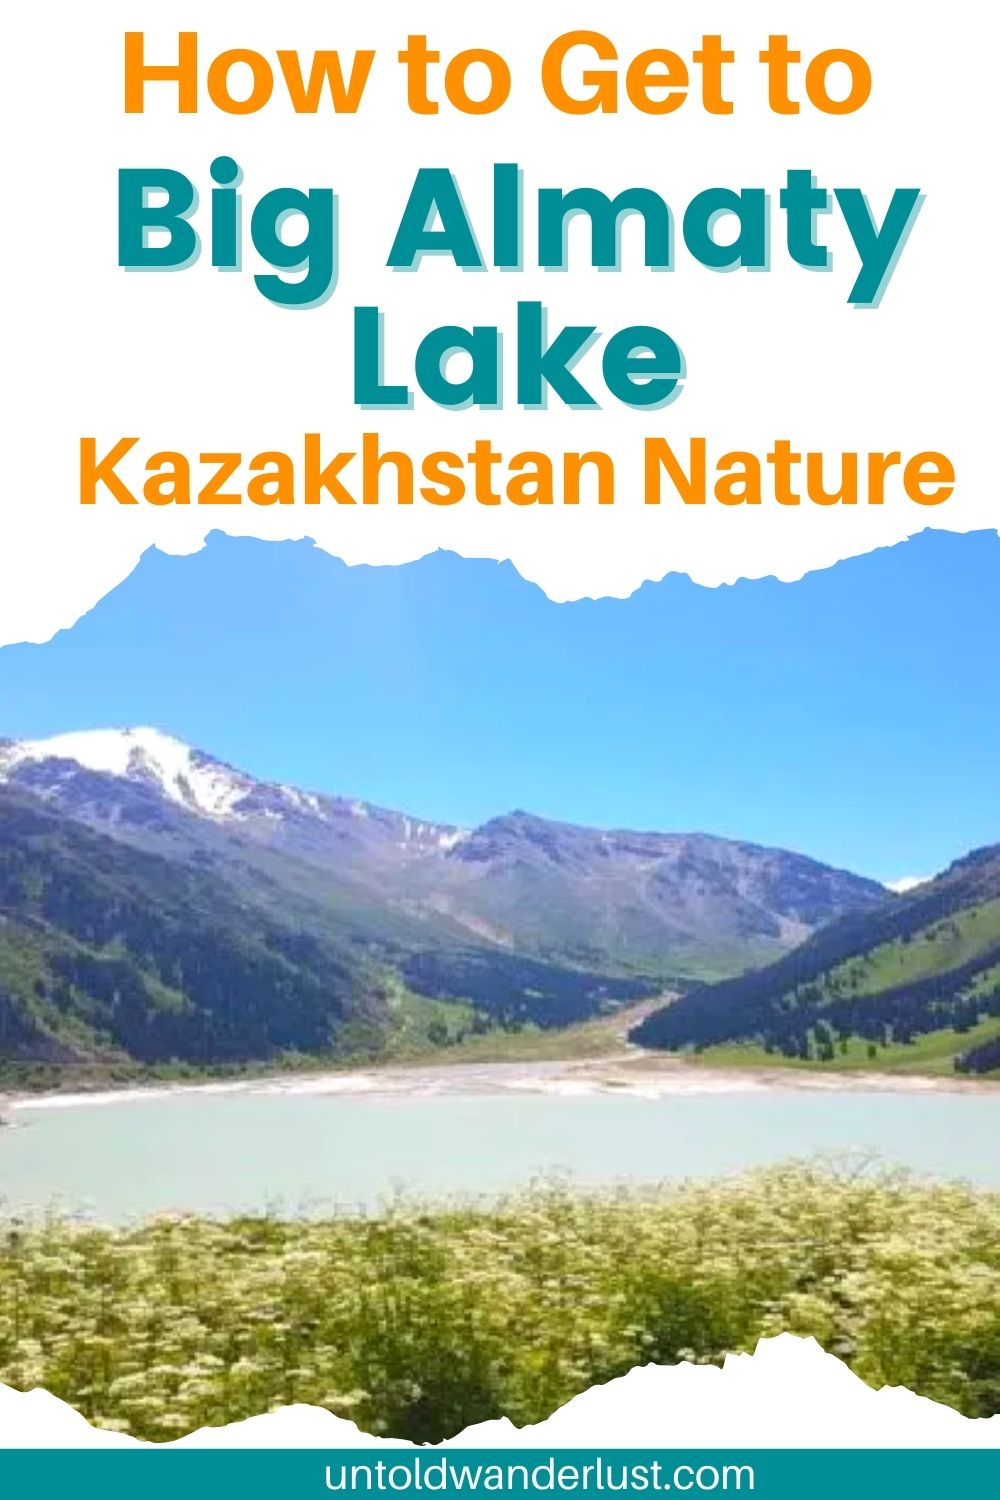 How to Get to Big Almaty Lake | Kazakhstan Nature